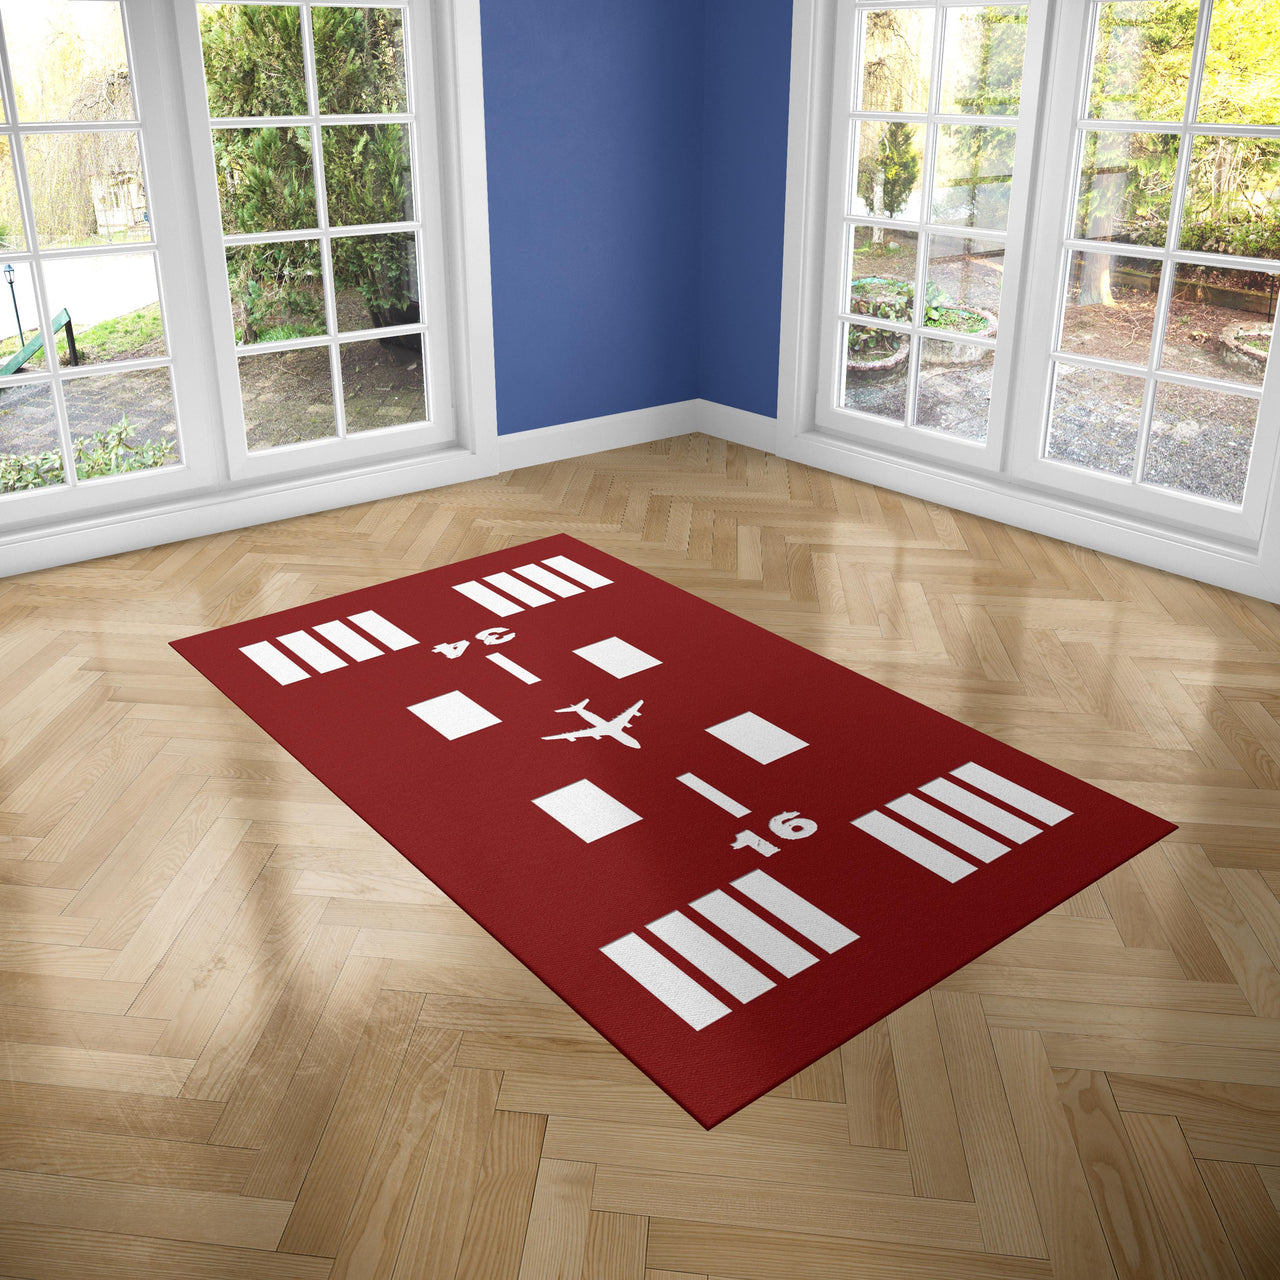 Special Runway (Red) 34-16 Designed Carpet & Floor Mats